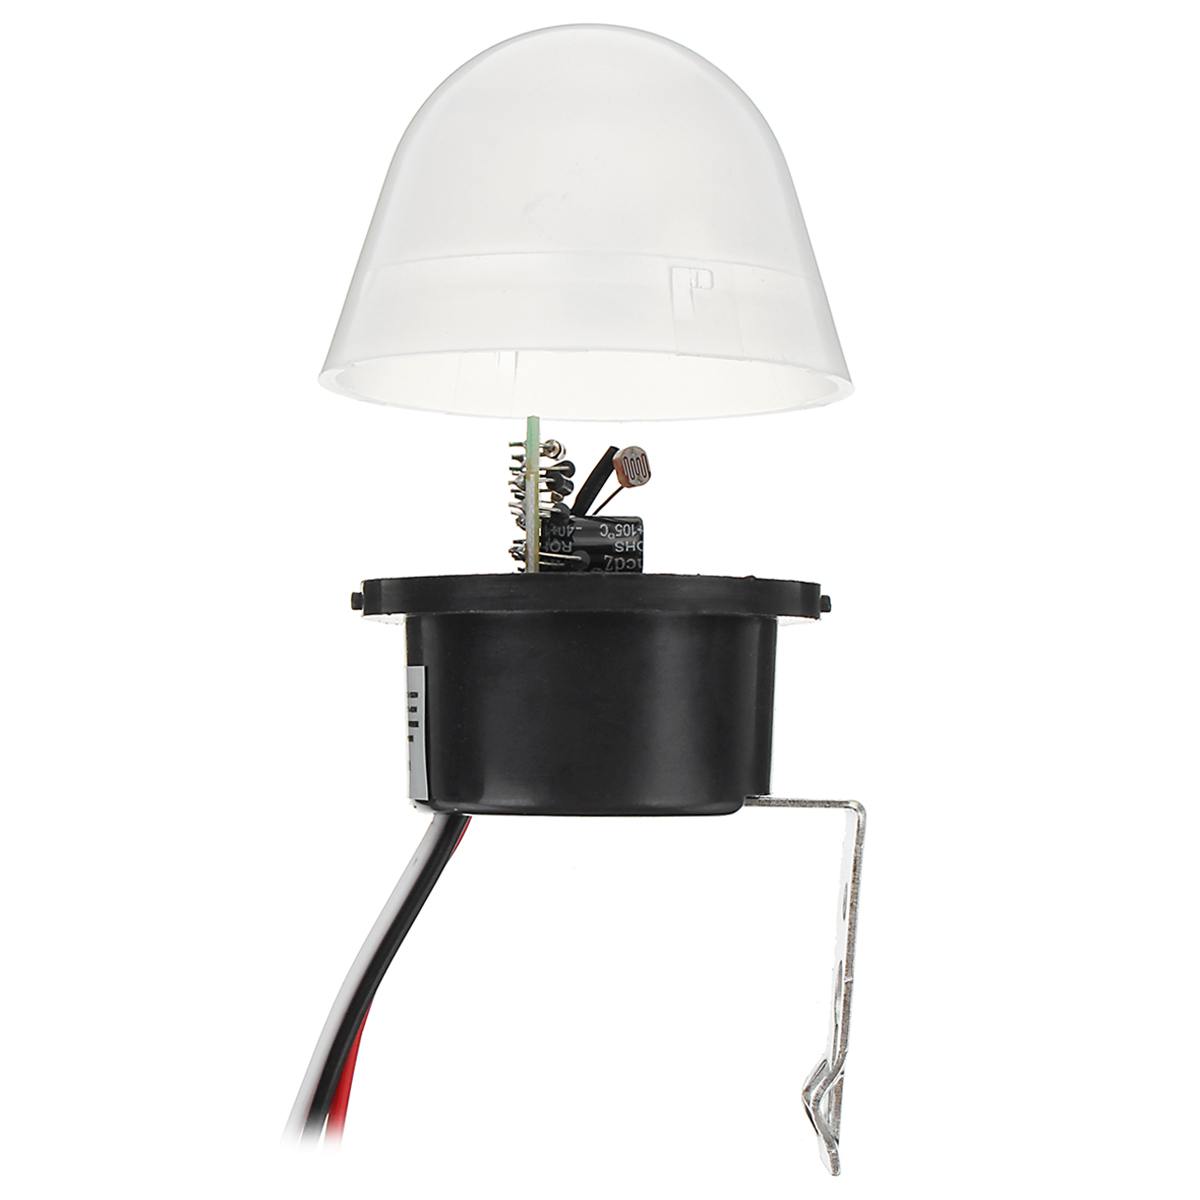 Photoswitch-Sensor-Switch-Control-Street-Light-Lamp-Auto-On-Off-Photocell-220V-1571327